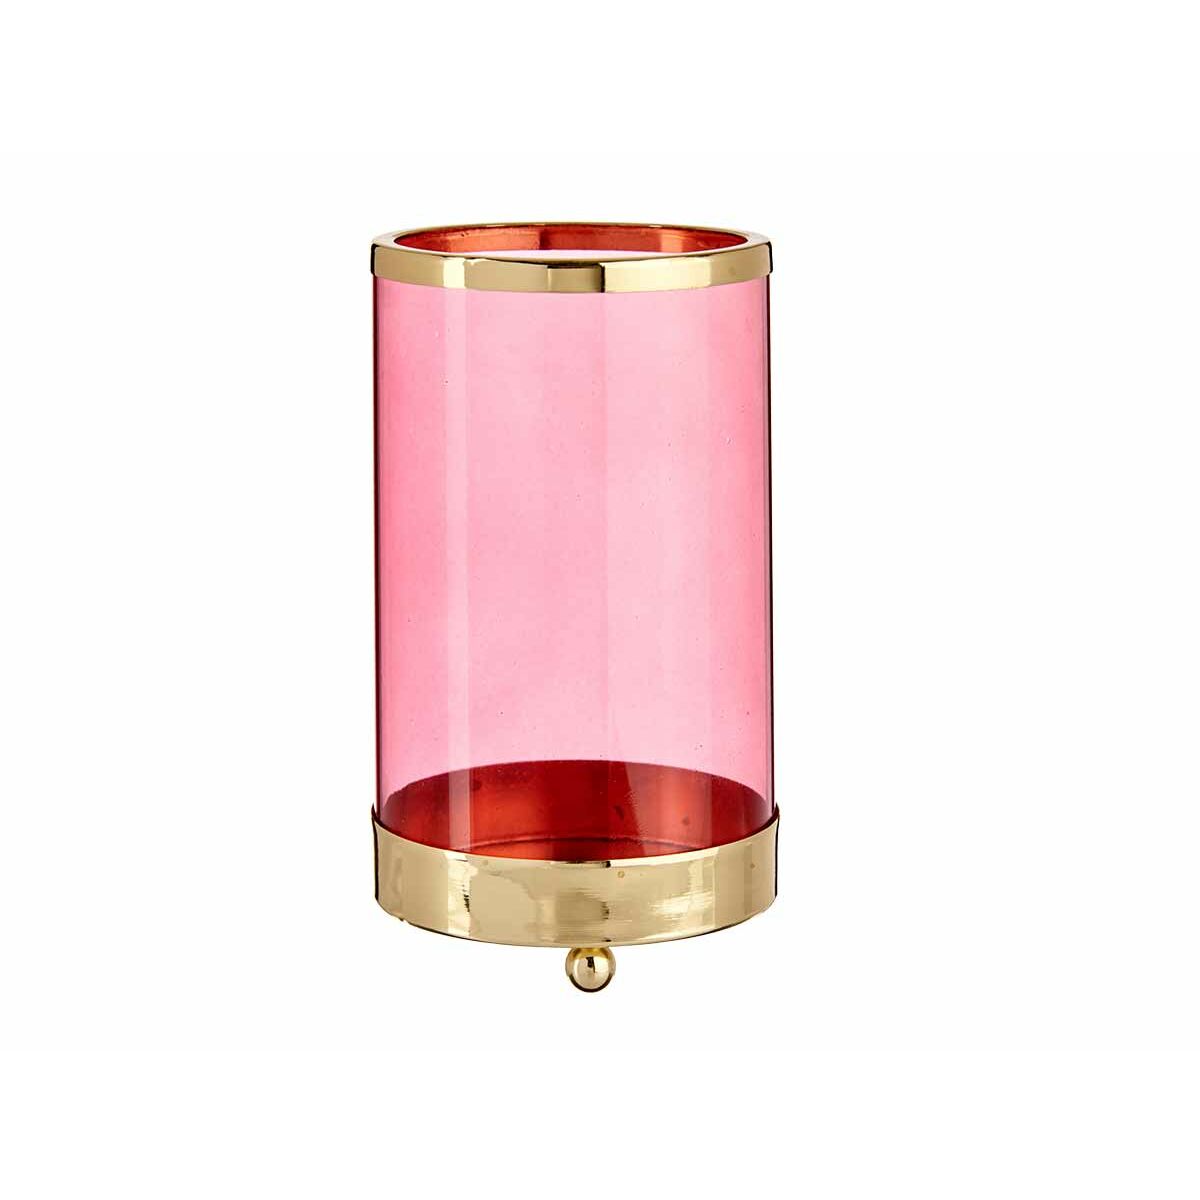 Kerzenschale Rosa Gold Zylinder 9,7 x 16,5 x 9,7 cm Metall Glas